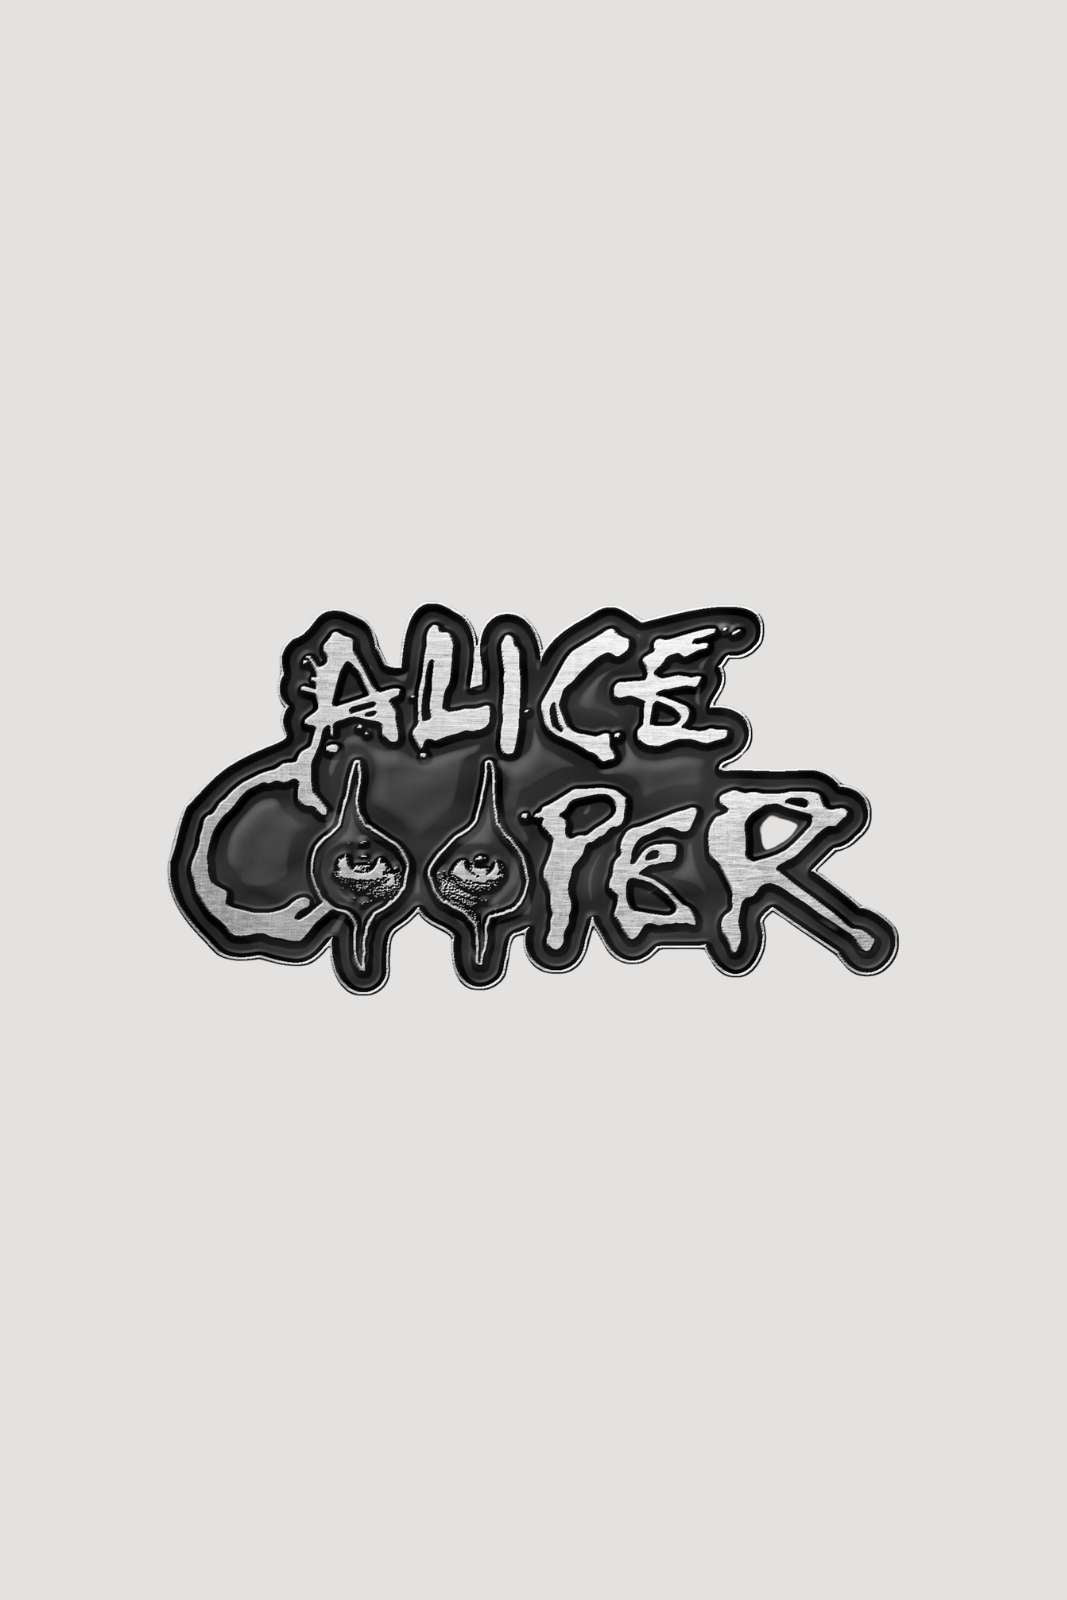 Alice Cooper Pin Badge